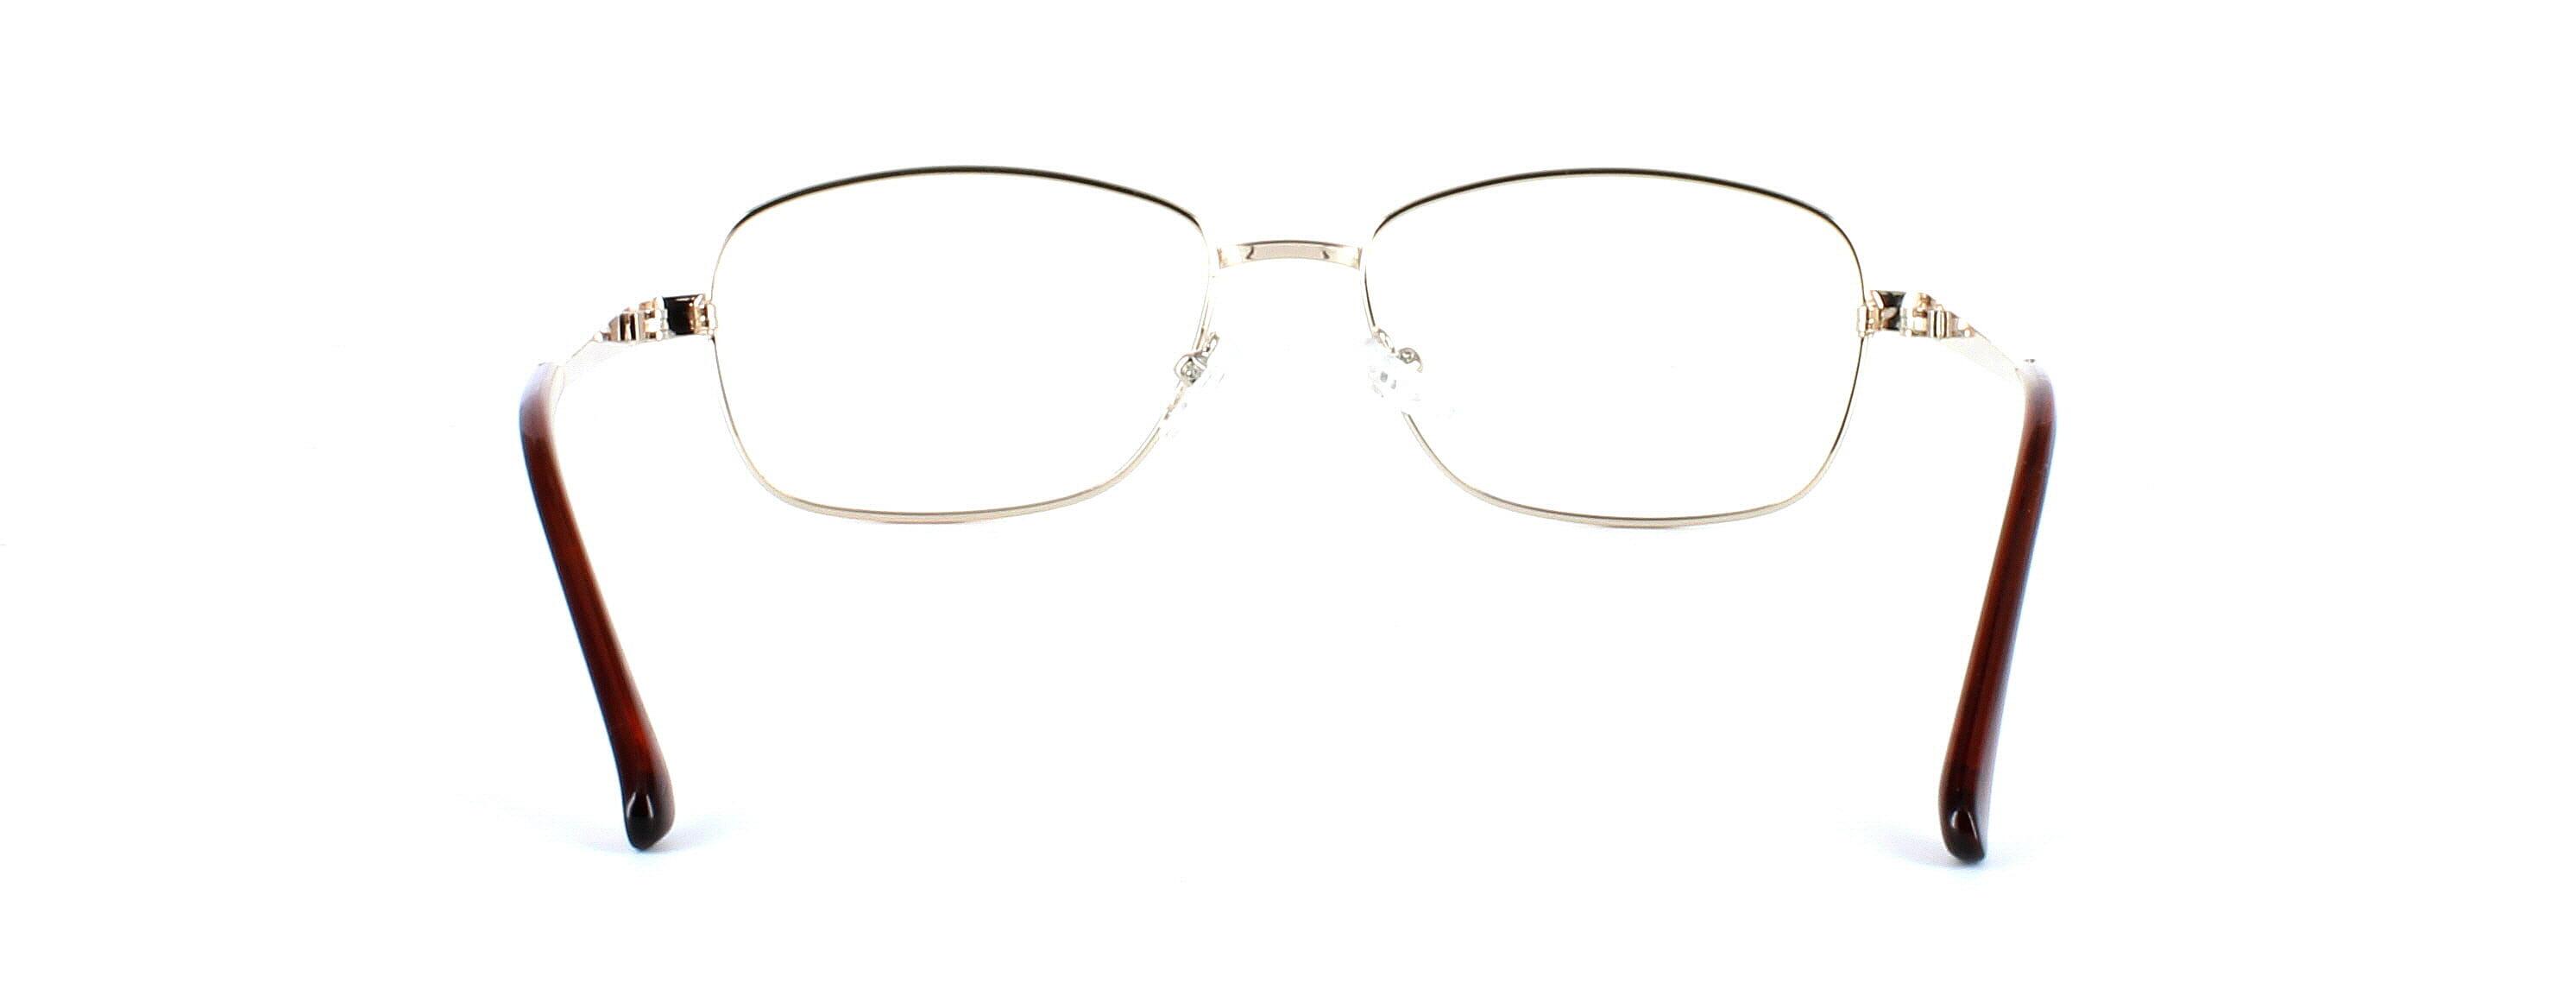 Heather - Ladies rectangular shaped full-rim metal glasses frame - image view 4